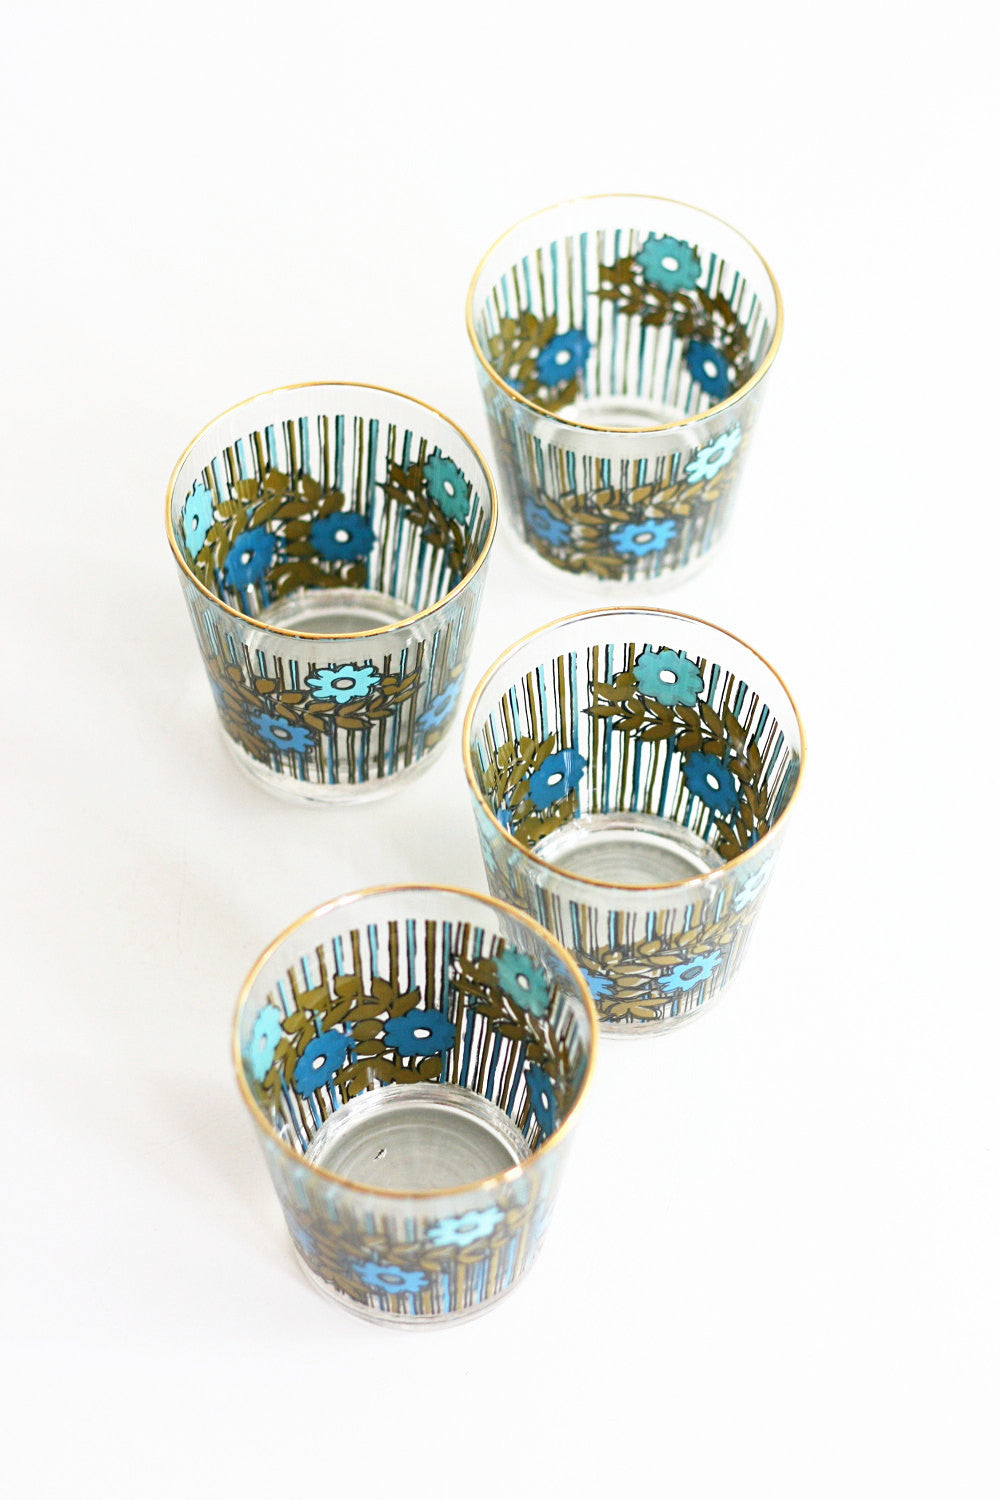 SOLD - Vintage Flower Drinking Glasses / Mid Century Modern Flower Tumblers